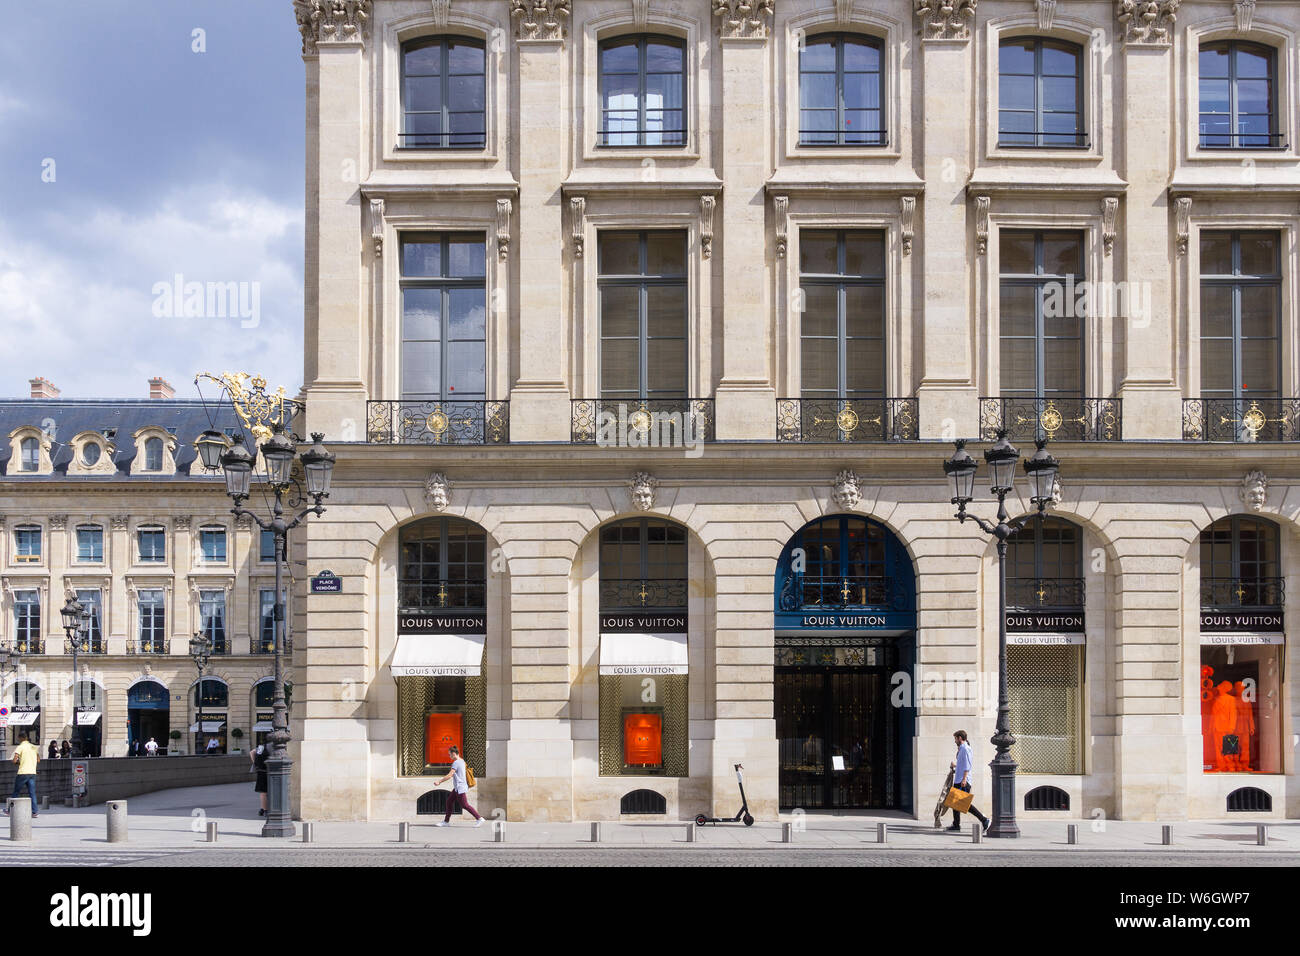 Paris shopping - Louis Vuitton store in Place Vendome in Paris, France, Europe. Stock Photo